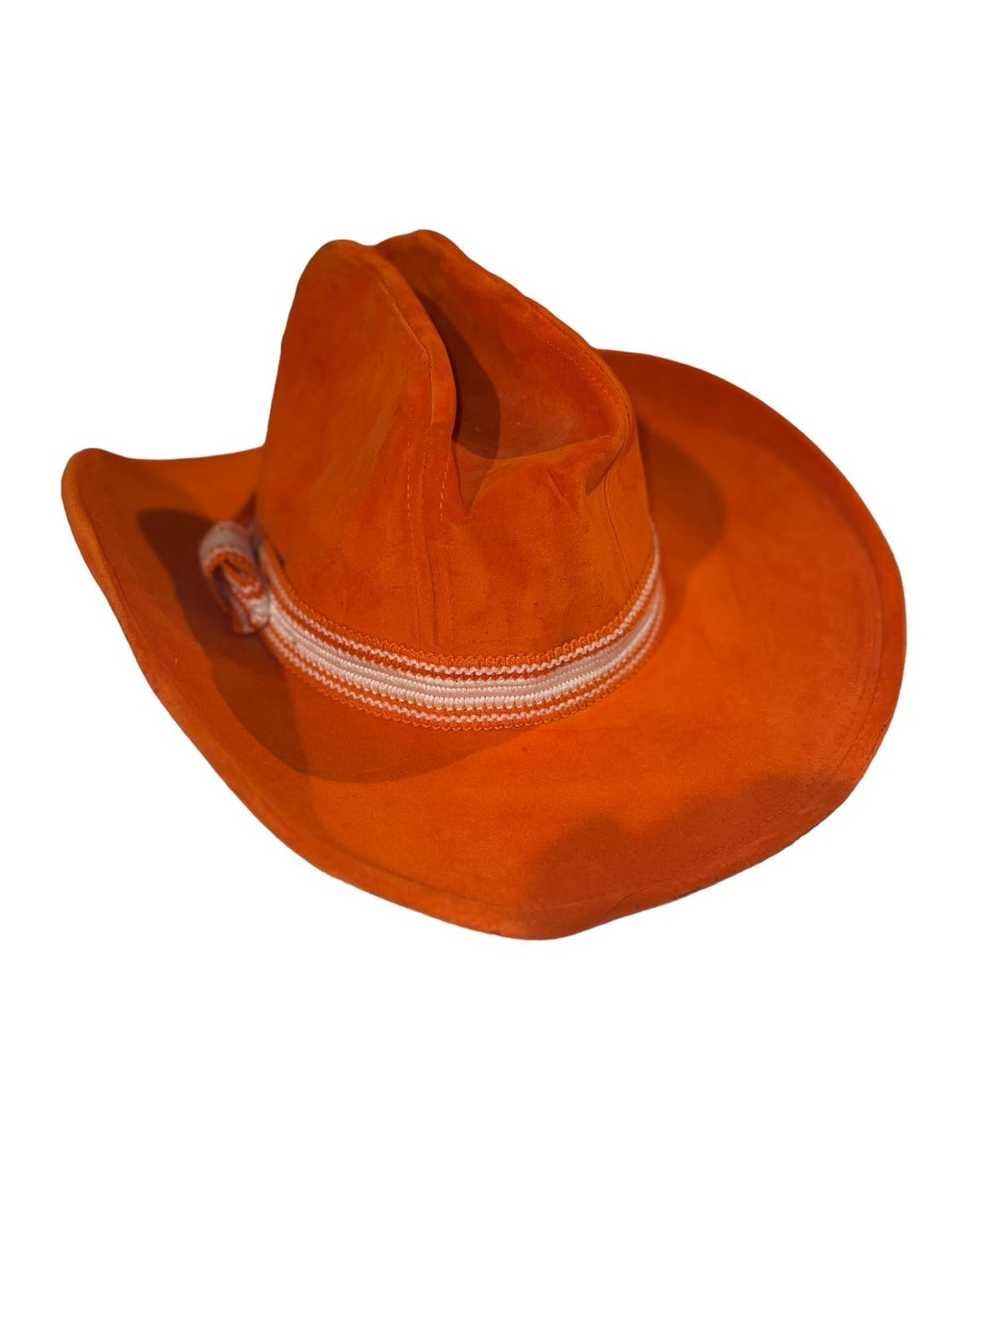 Vintage Rare Tampa bay bucs orange cowboy hat sla… - image 2